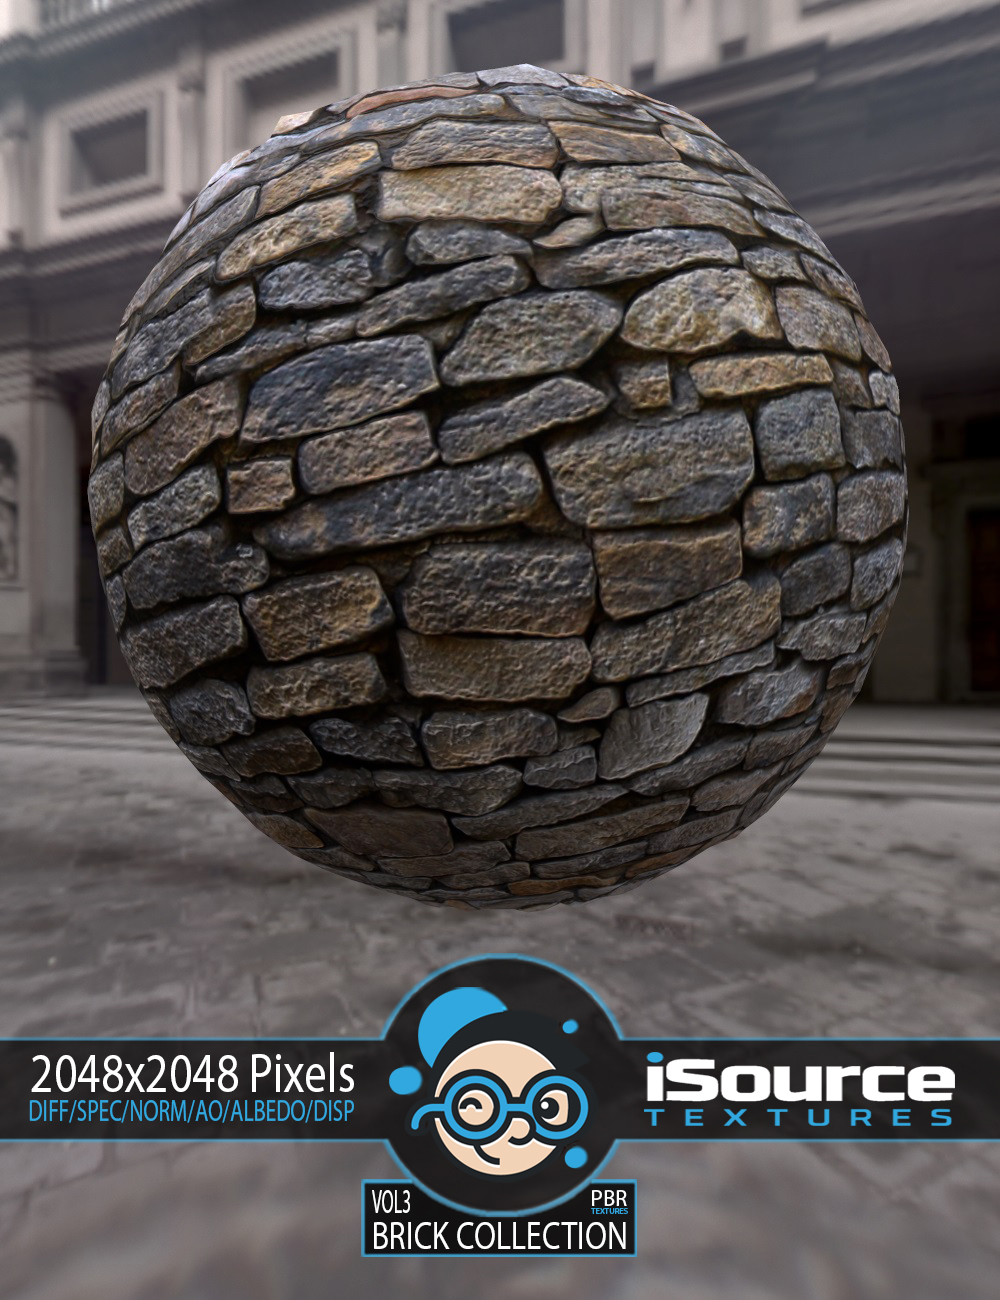 Brick Collection Merchant Resource - Vol3 (PBR Textures) by: iSourceTextures, 3D Models by Daz 3D